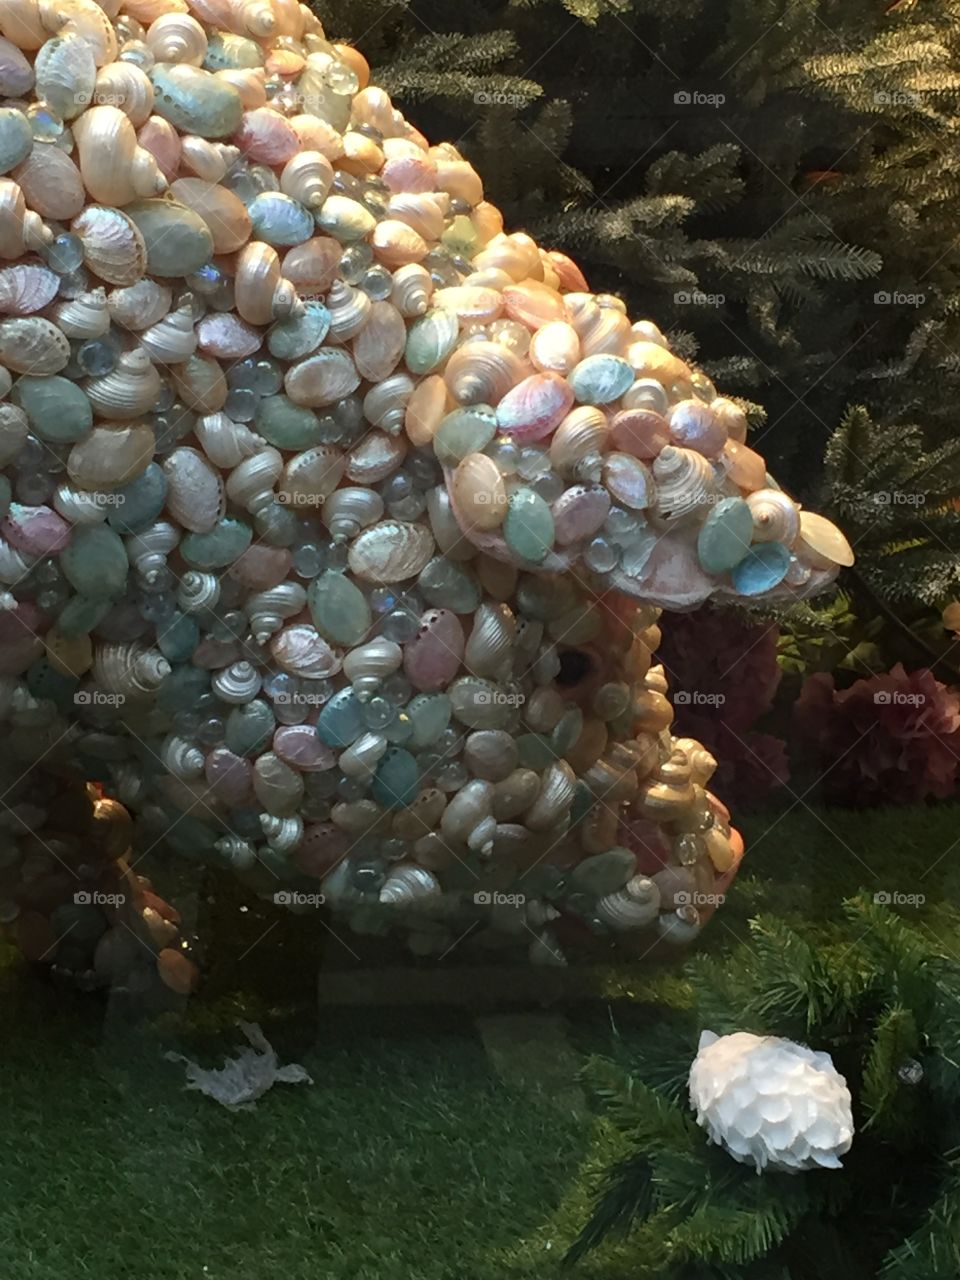 "Shellfish Pig" seen in store window in Bath -Autumn 2015